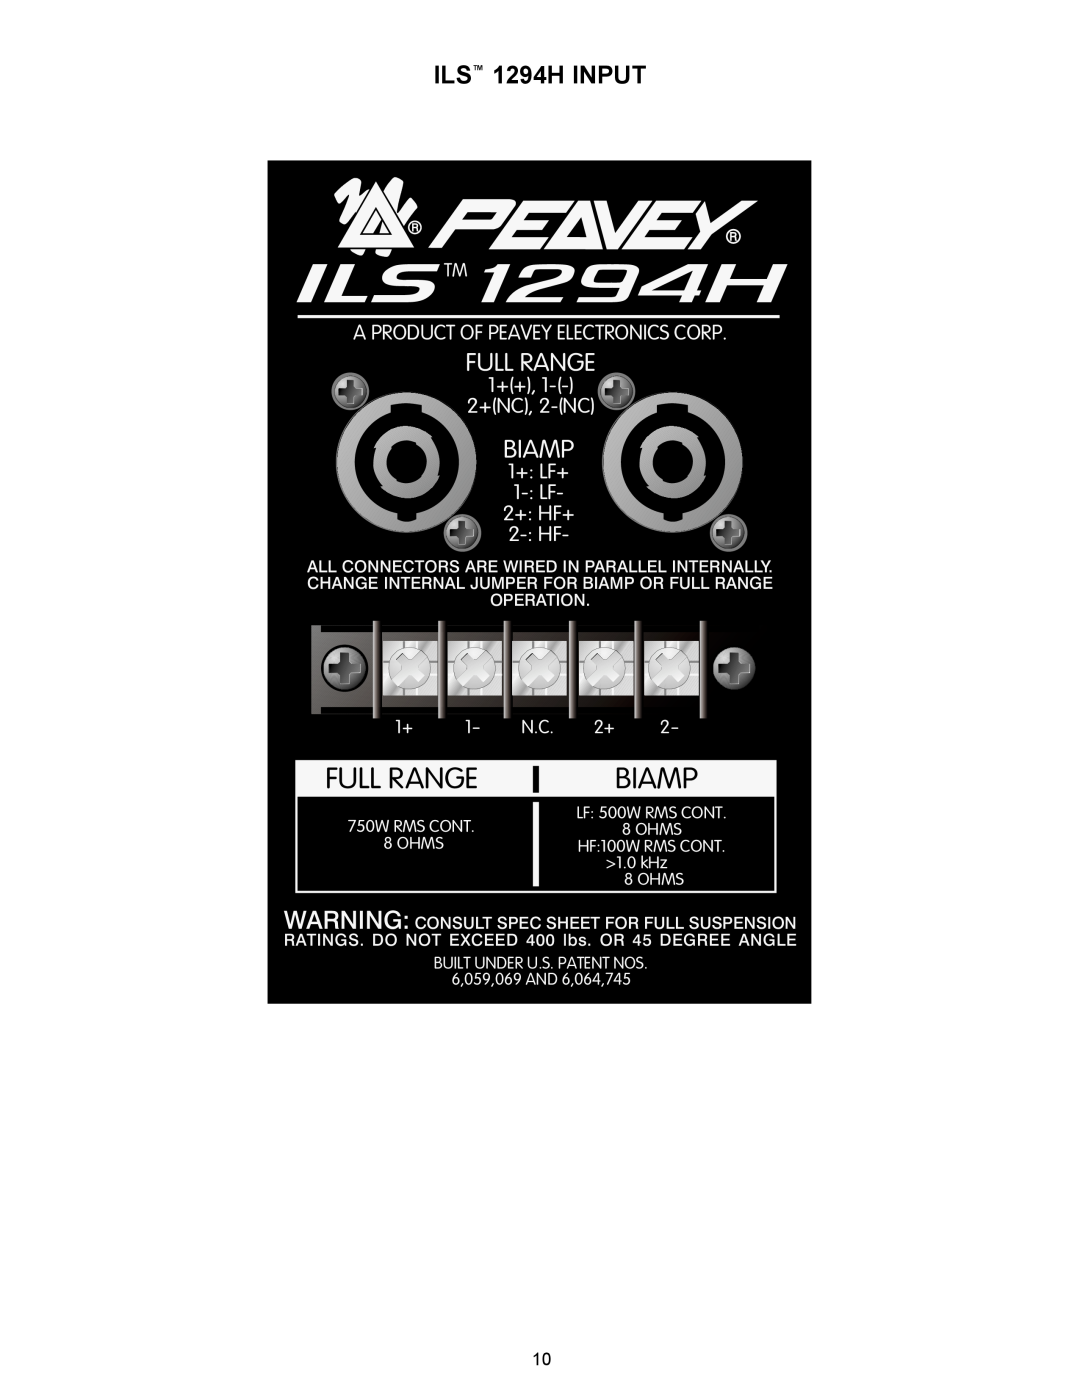 Peavey ILS 1294 H ILSTM1294H, Full Range, Biamp, ILS 1294H INPUT, A Product Of Peavey Electronics Corp, 1++, 2+ HF+, 2- HF 